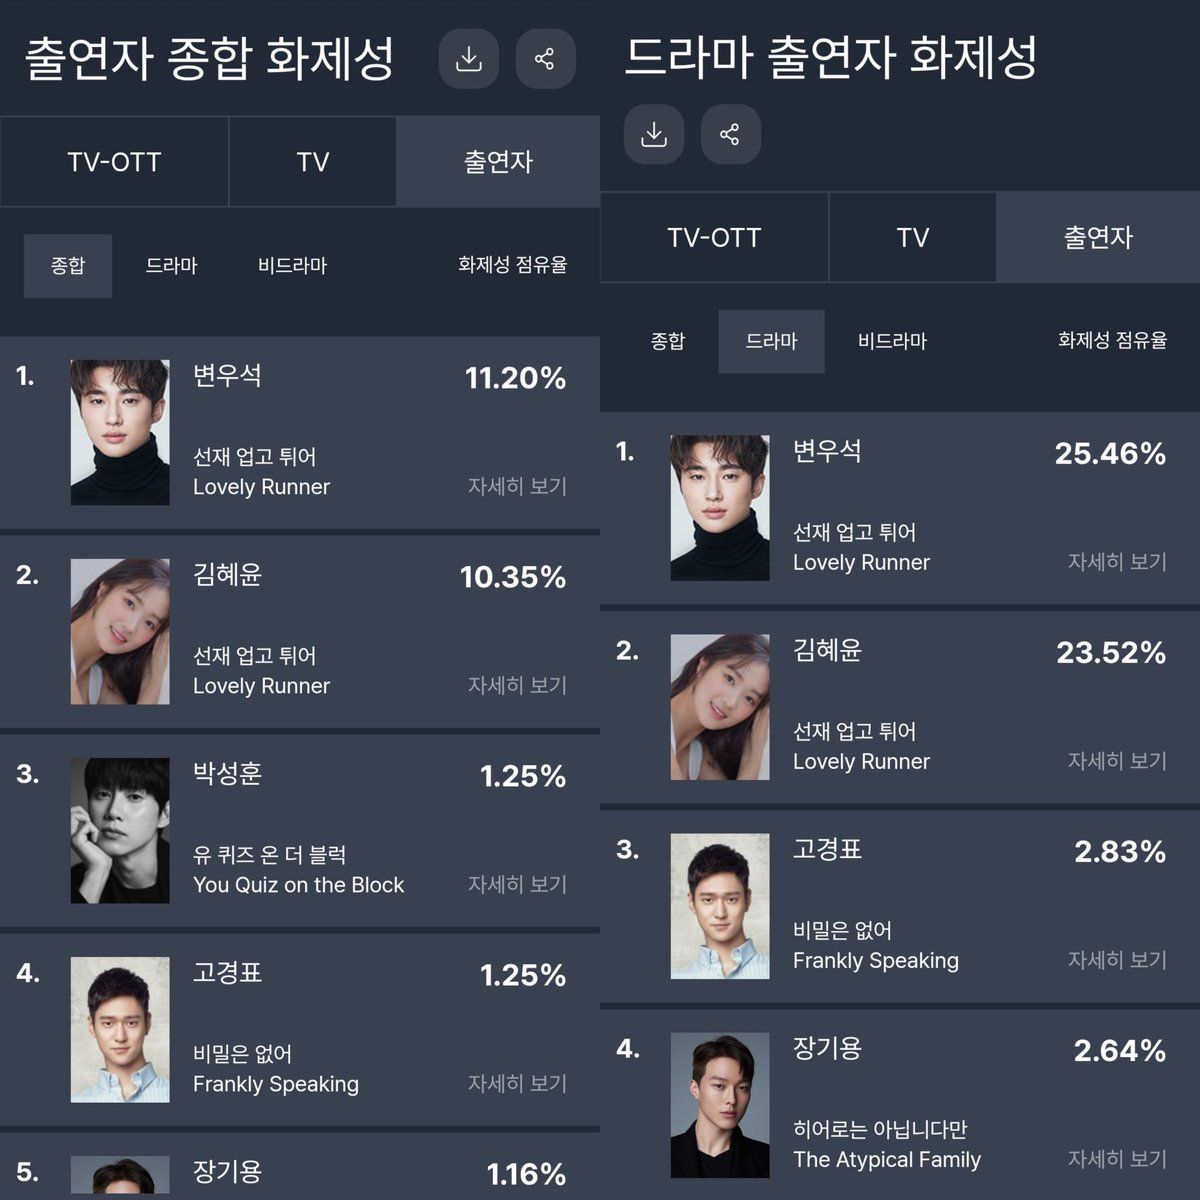 #LovelyRunner #ByeonWooseok #KimHyeyoon dominating broadcast industry in South Korea right now based on latest GoodData ranking 🥹🥹🥹